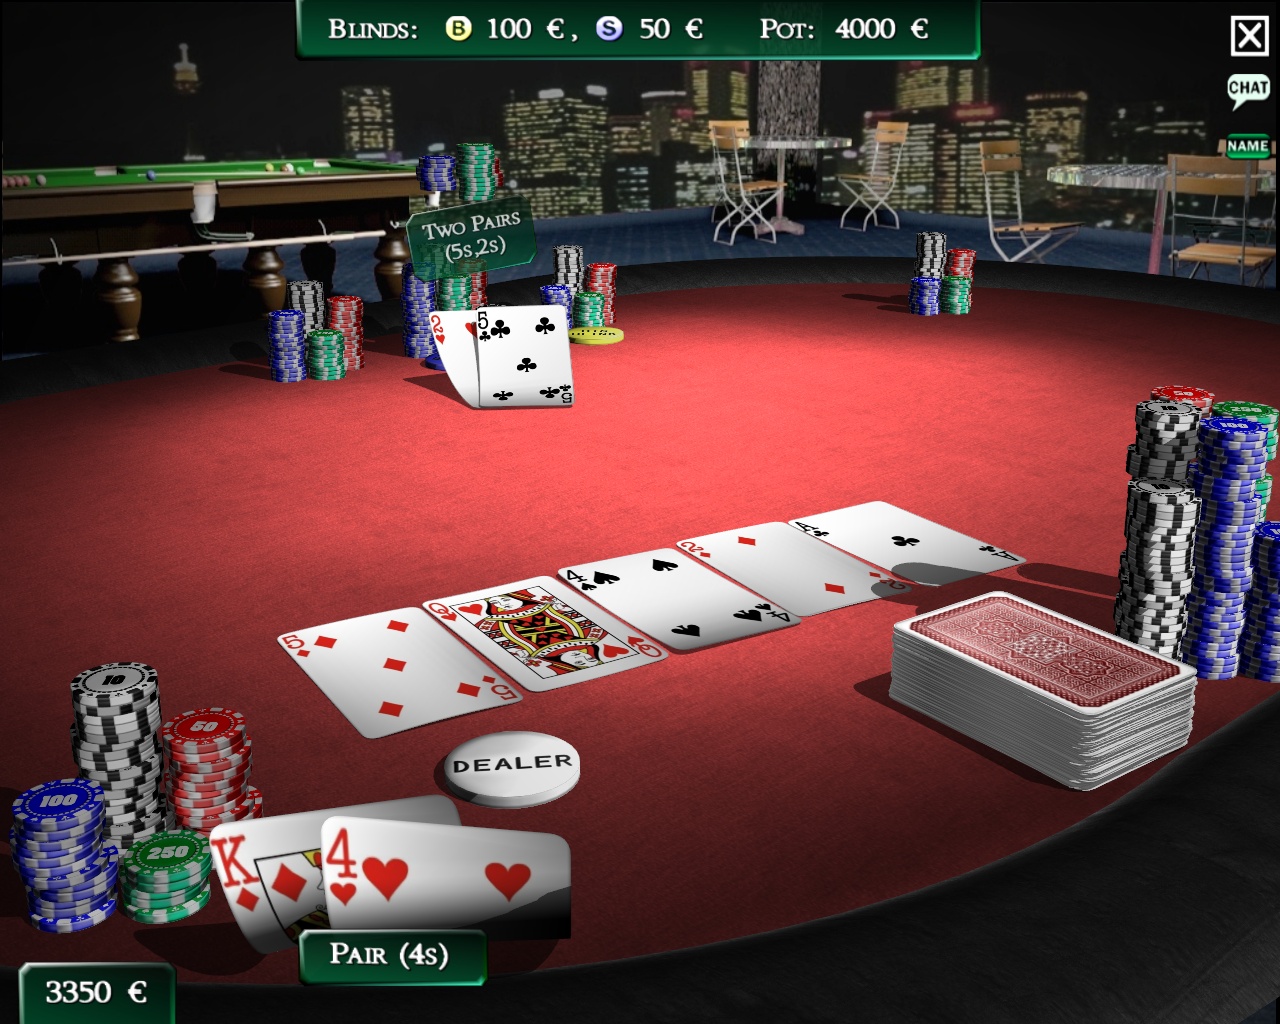 Texas Hold Poker